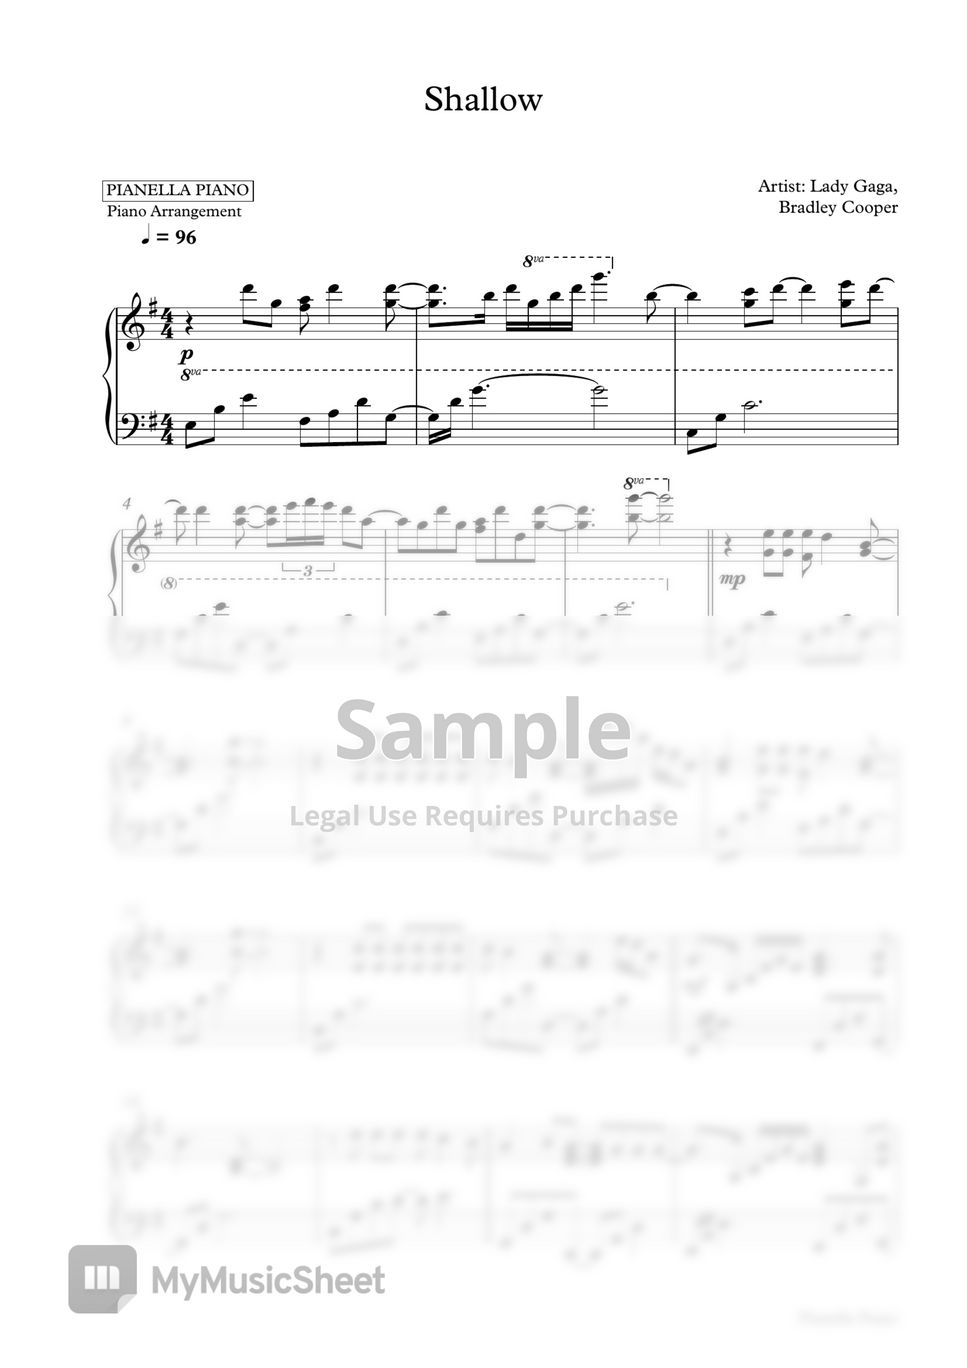 Lady Gaga, Bradley Cooper - Shallow (Piano Sheet) by Pianella Piano